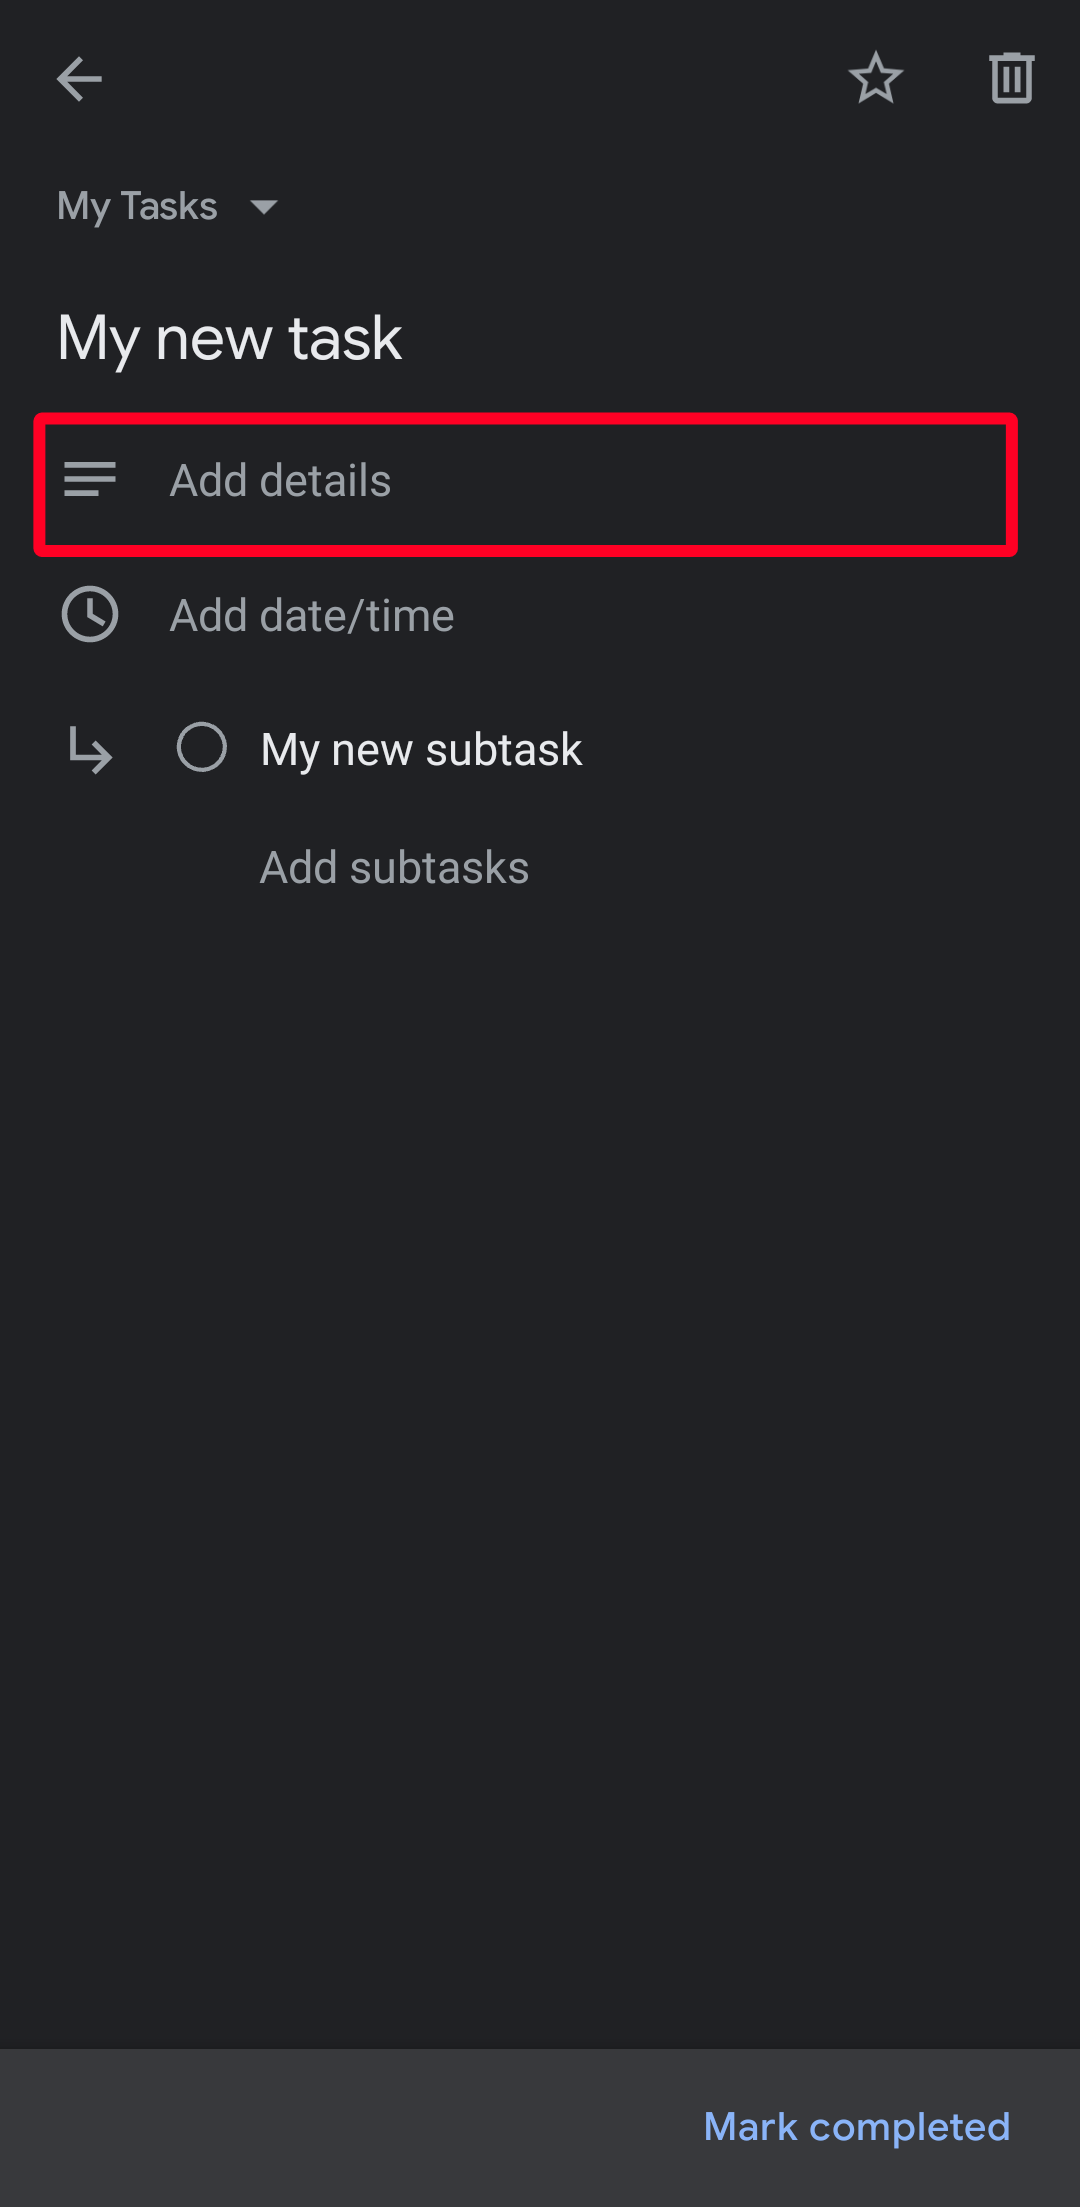 Add details option in Google Tasks Android app